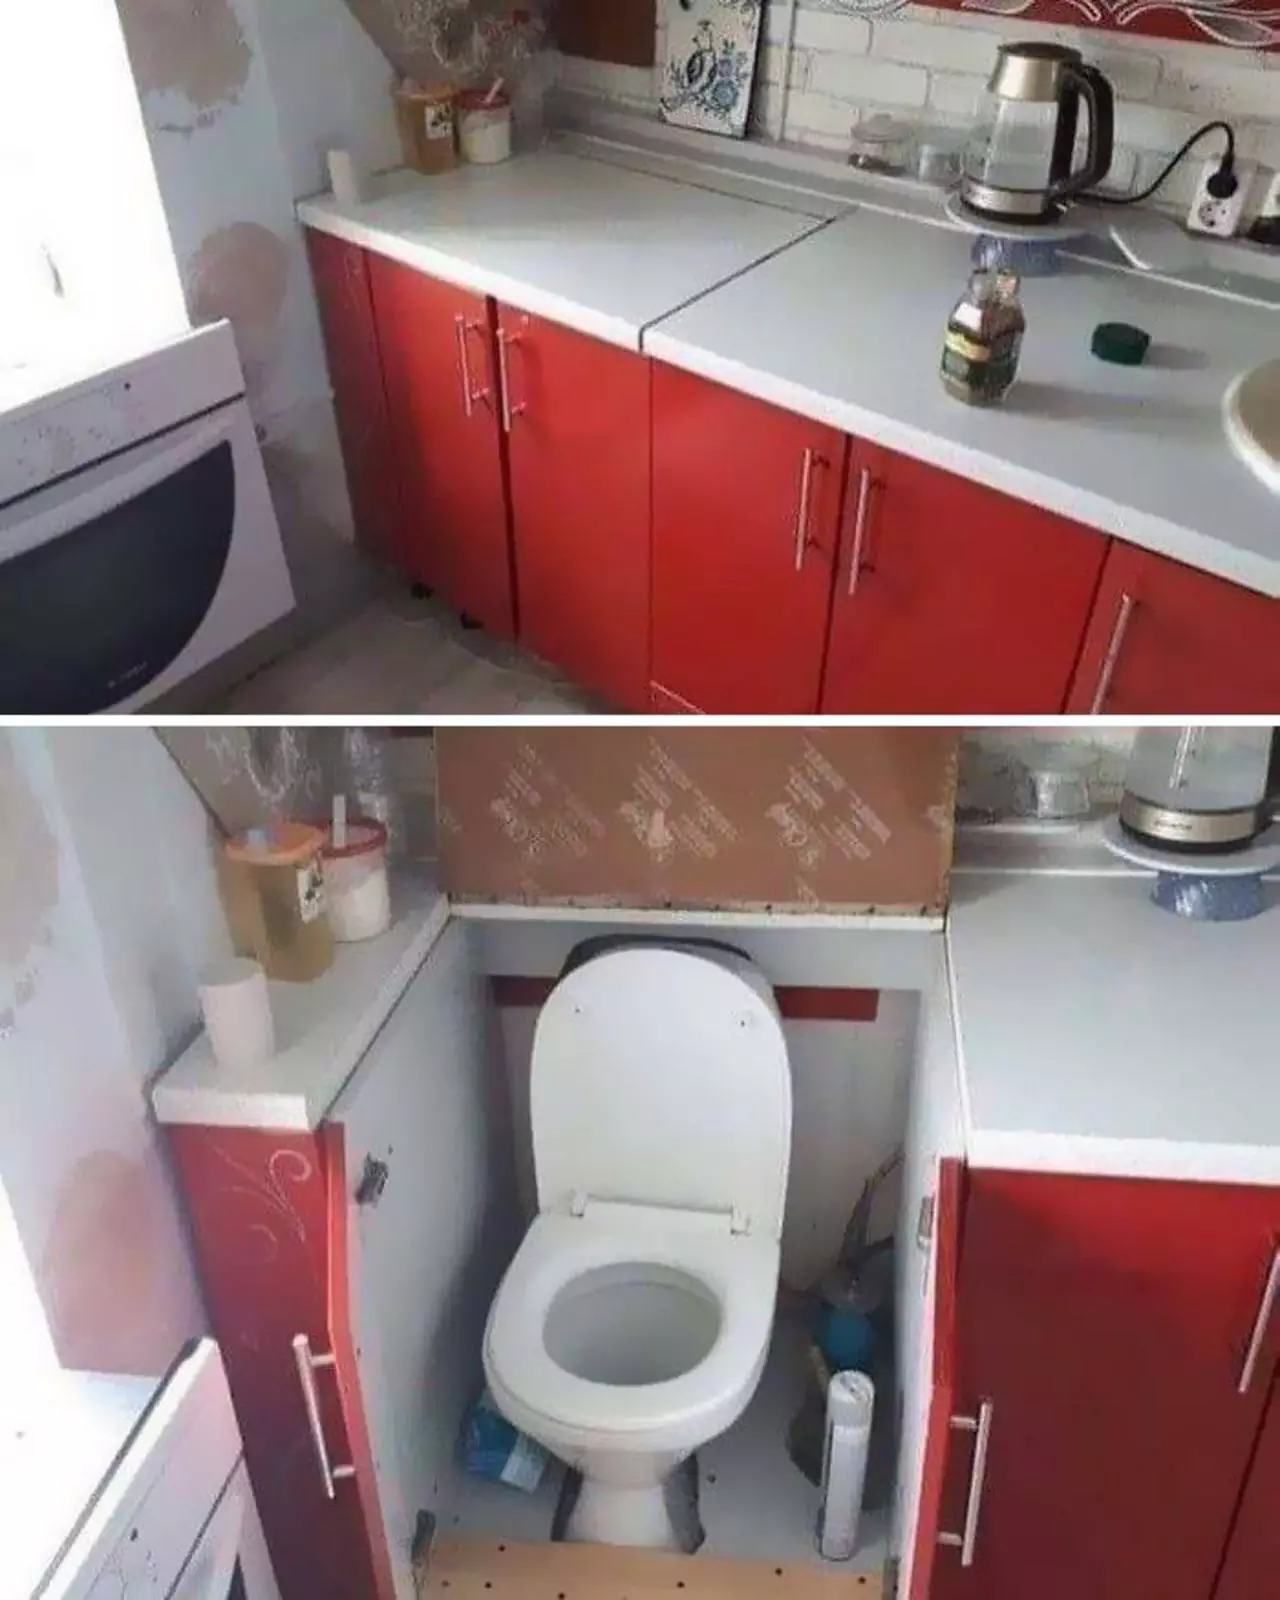 «Да кому нужна эта отдельная ванная комната?»